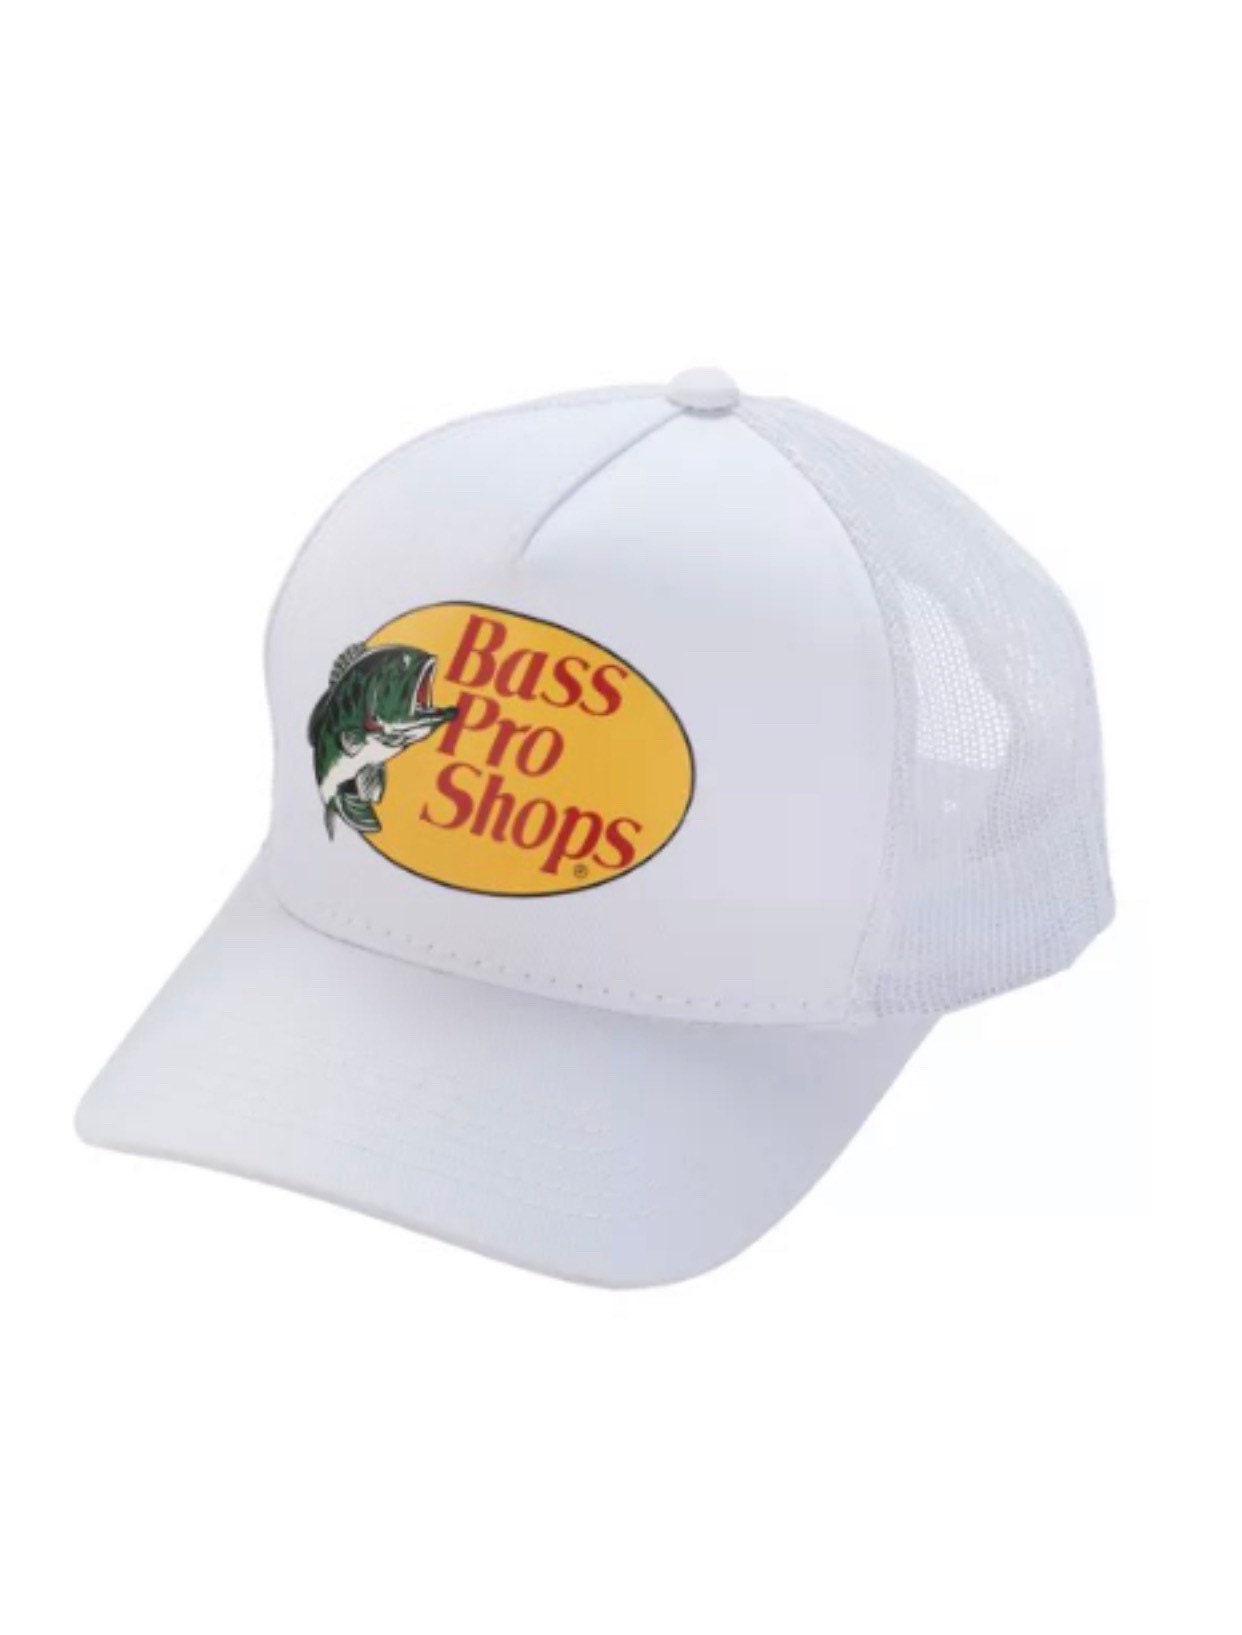 Bass-Pro Shop Hat Mesh Baseball Cap Unisex Australia